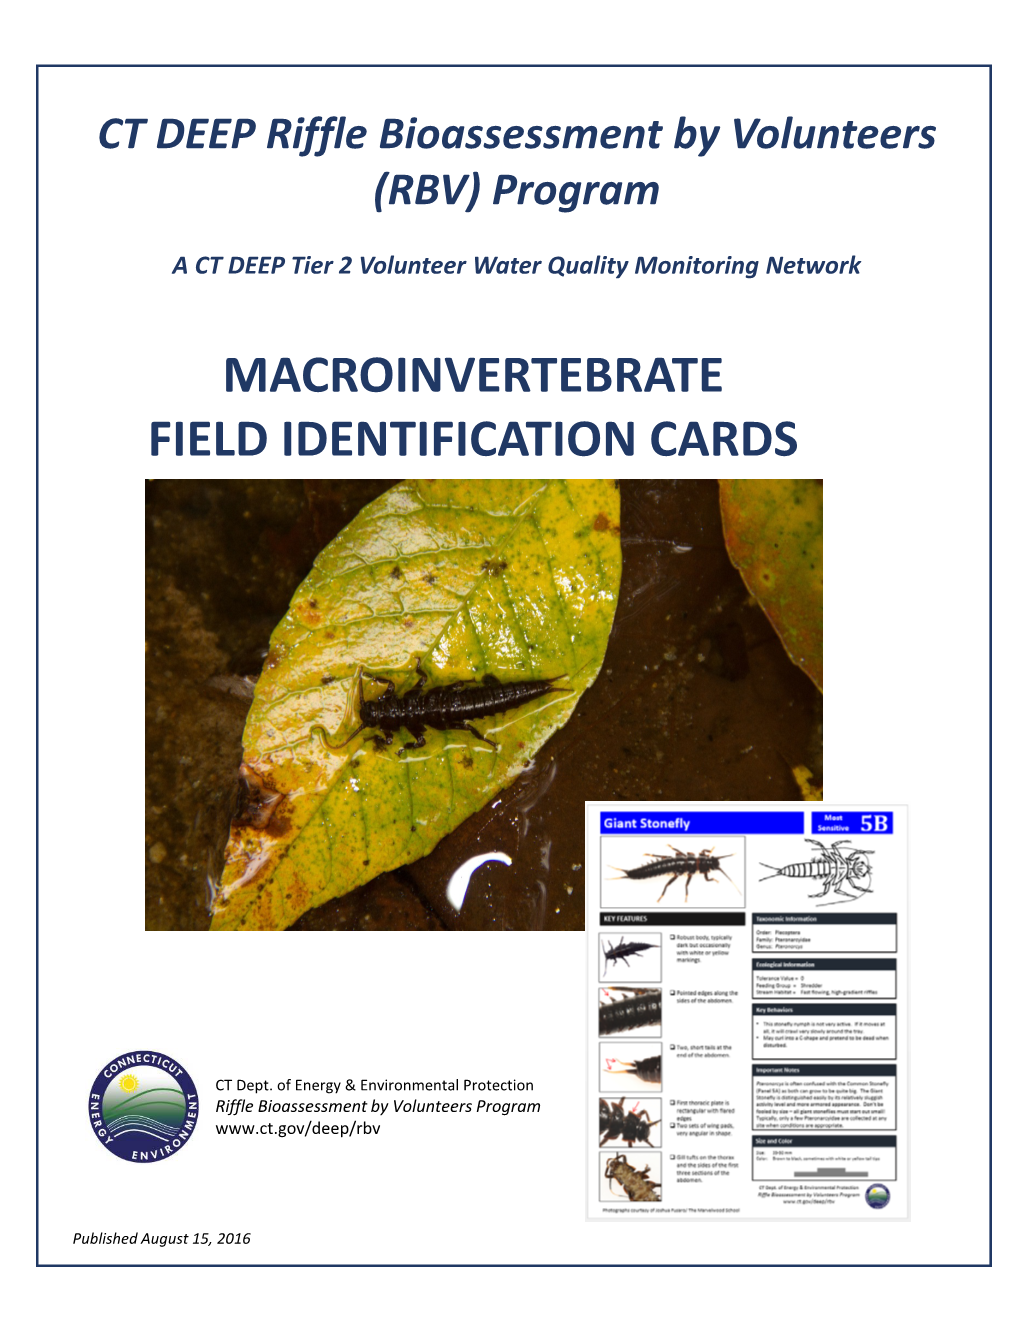 Macroinvertebrate Field Identification Cards